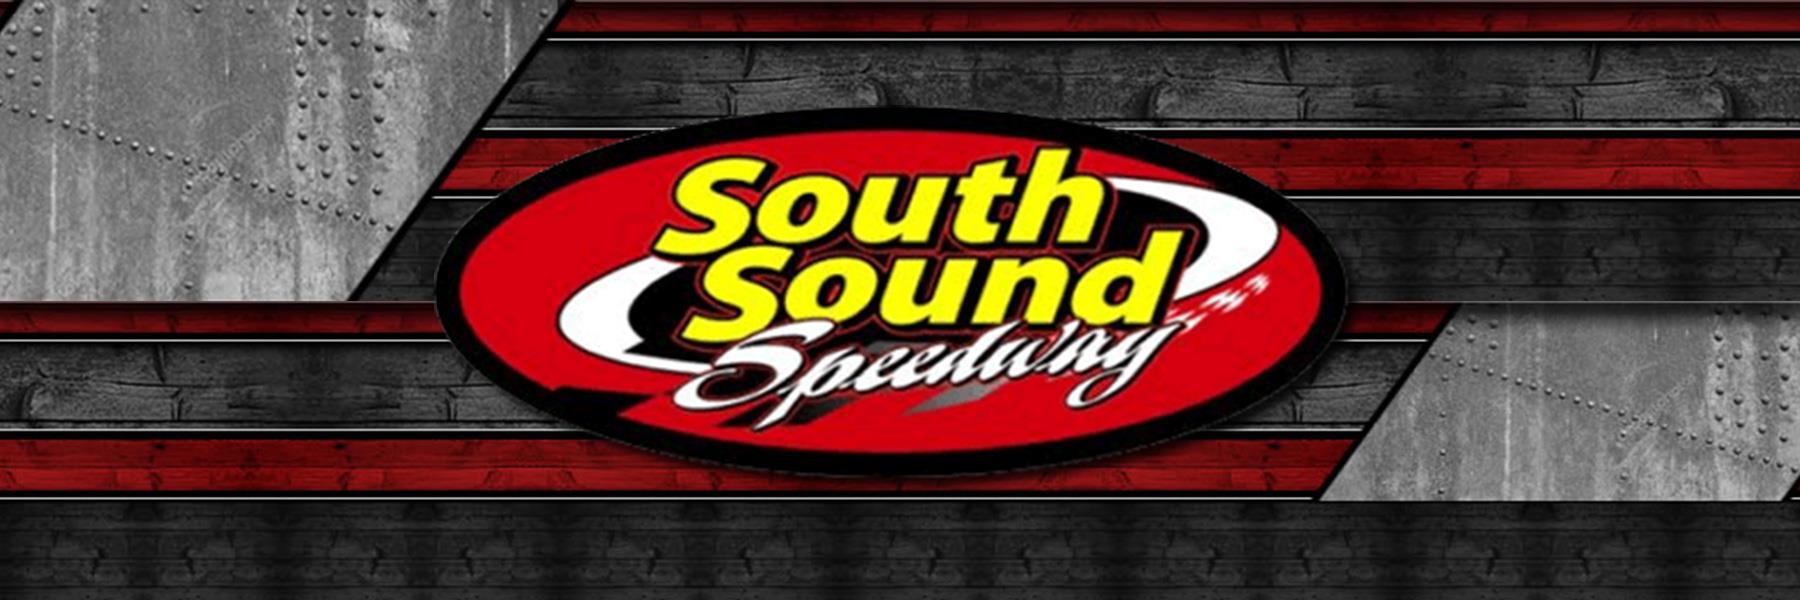 South Sound Speedway